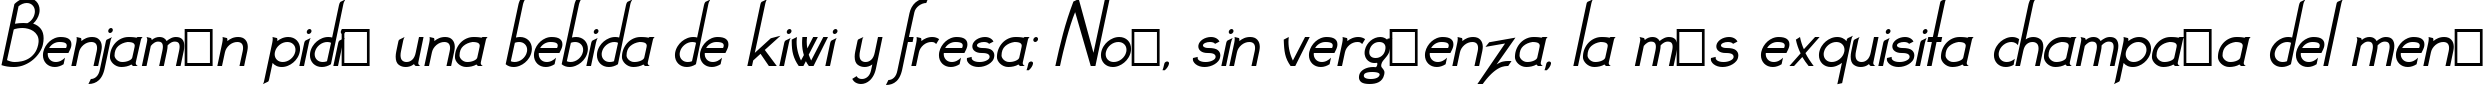 Пример написания шрифтом Claritty_Italic текста на испанском